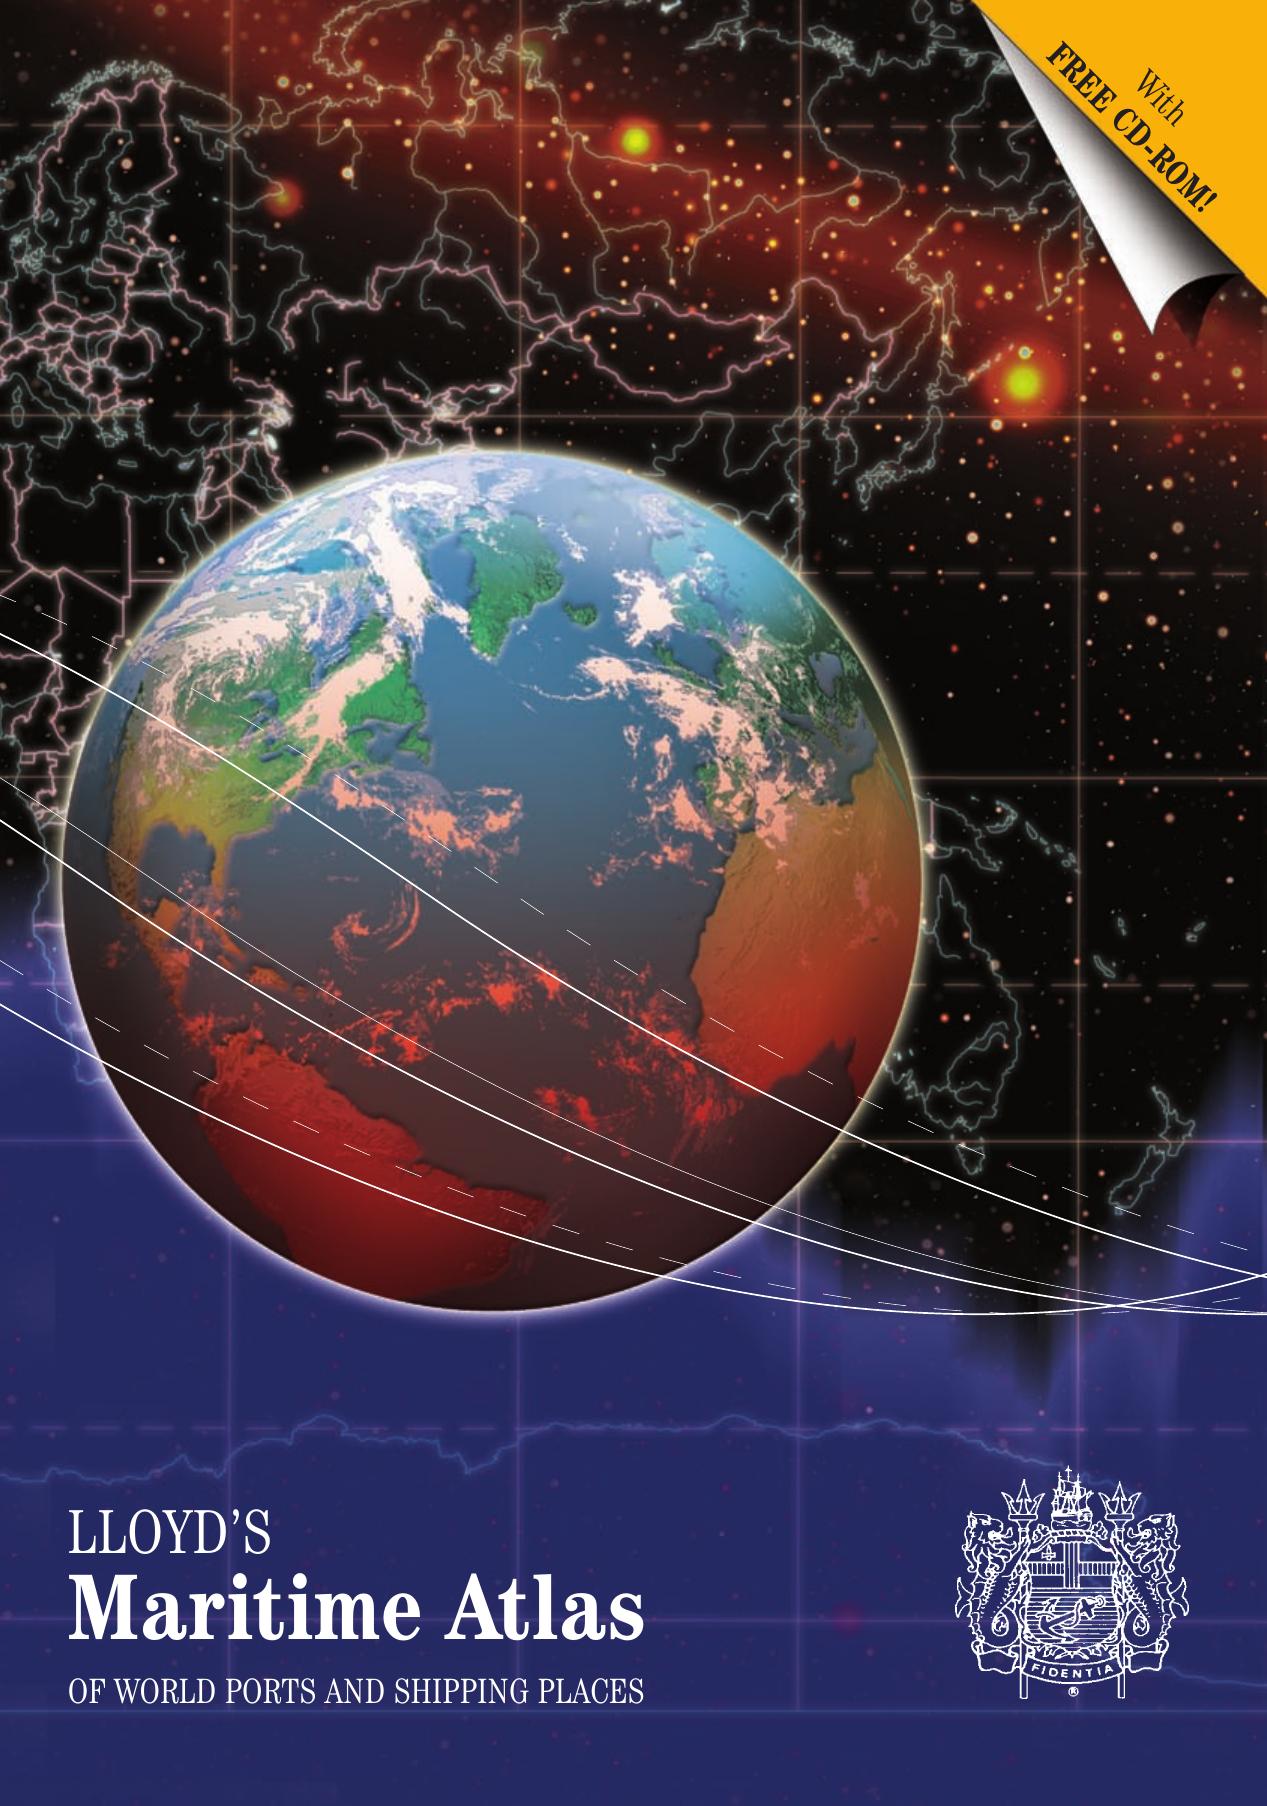 Lloyds Maritime Atlas